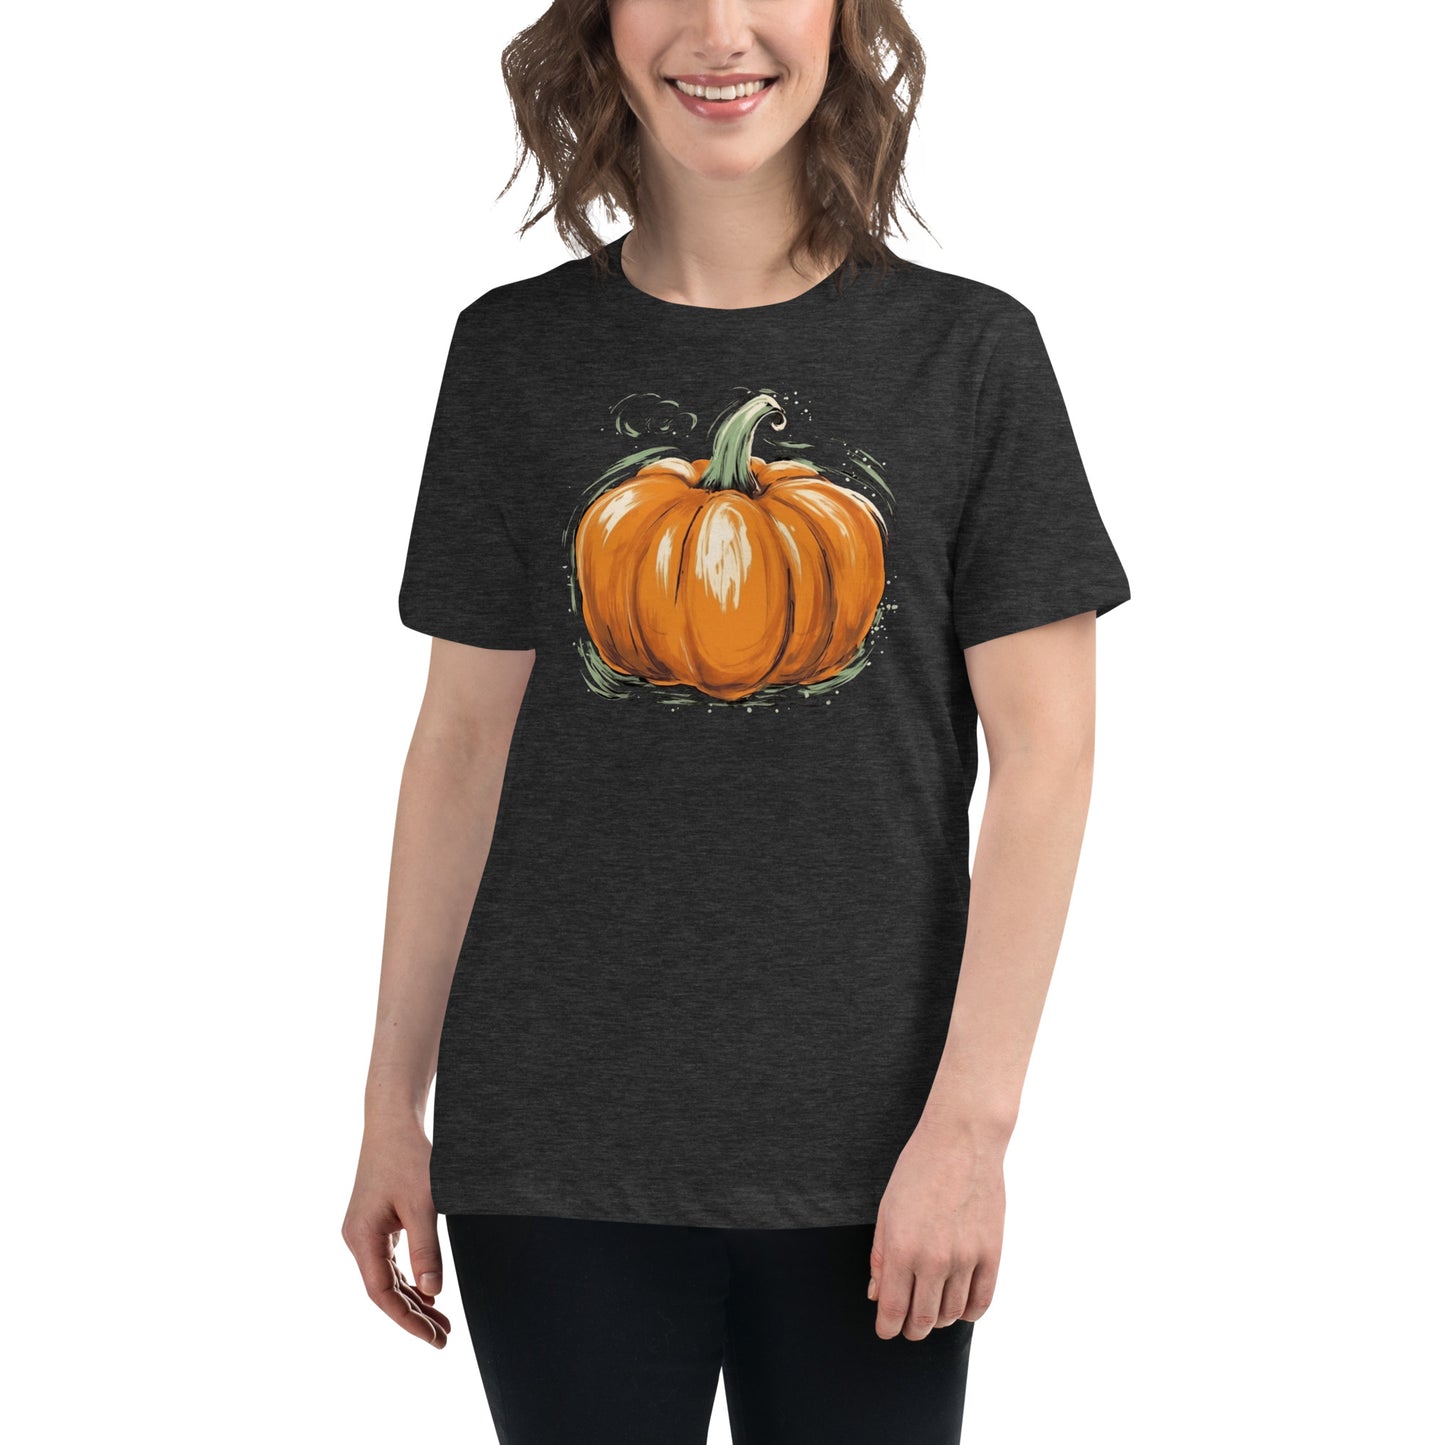 Pumpkin Women Tshirt, Fall Autumn Thanksgiving Designer Graphic Aesthetic Fashion Relaxed Crewneck Tee Shirt Top Starcove Fashion